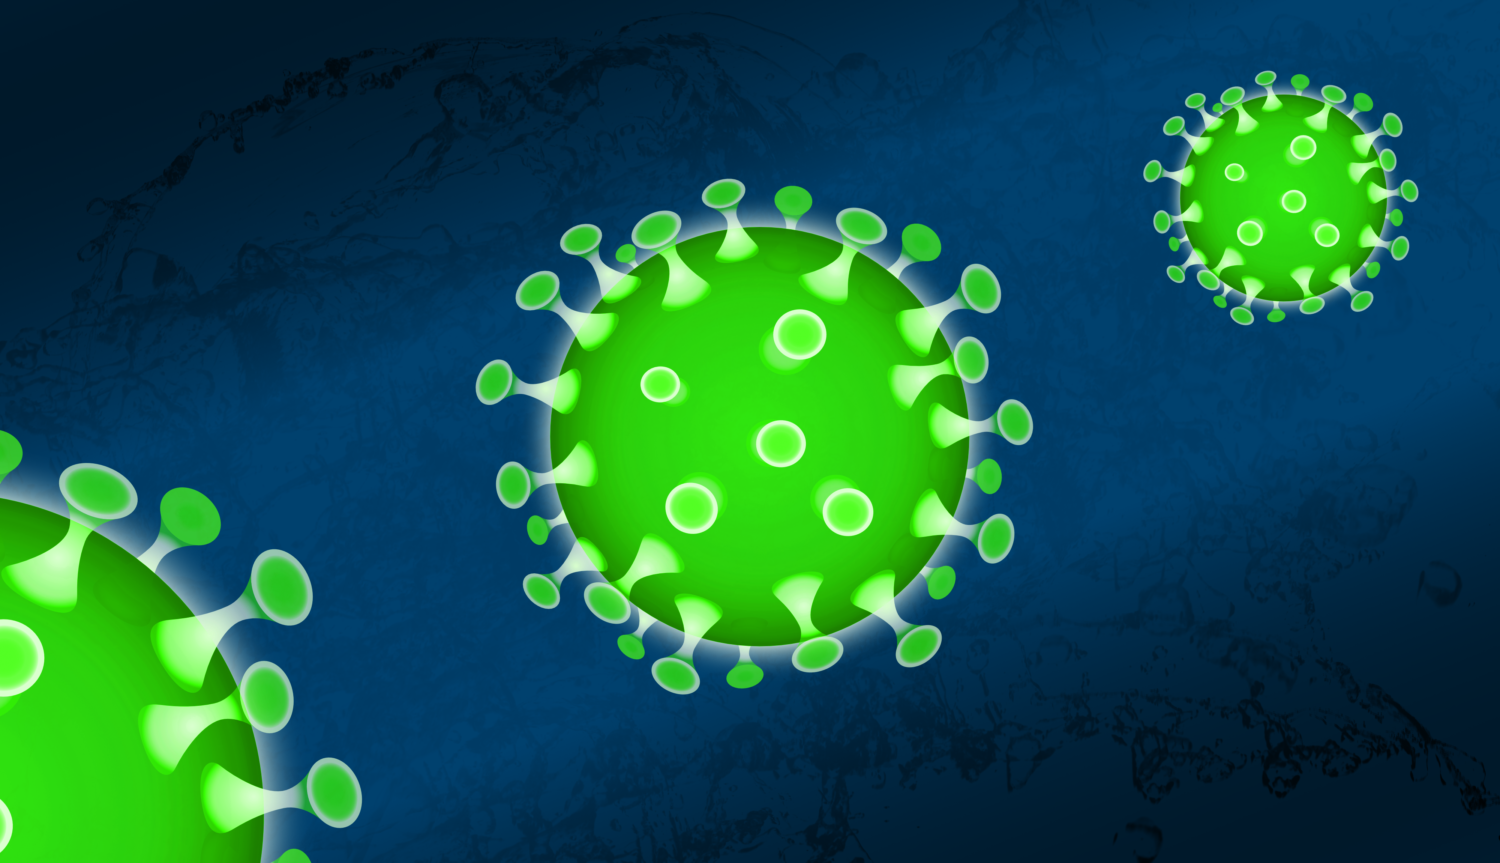 Gratis Download von iXimus.de: Coronavirus grün, Hintergrund blau, Symbol, Corona, Virus, Covid-19, Sars-Cov-2, #000215